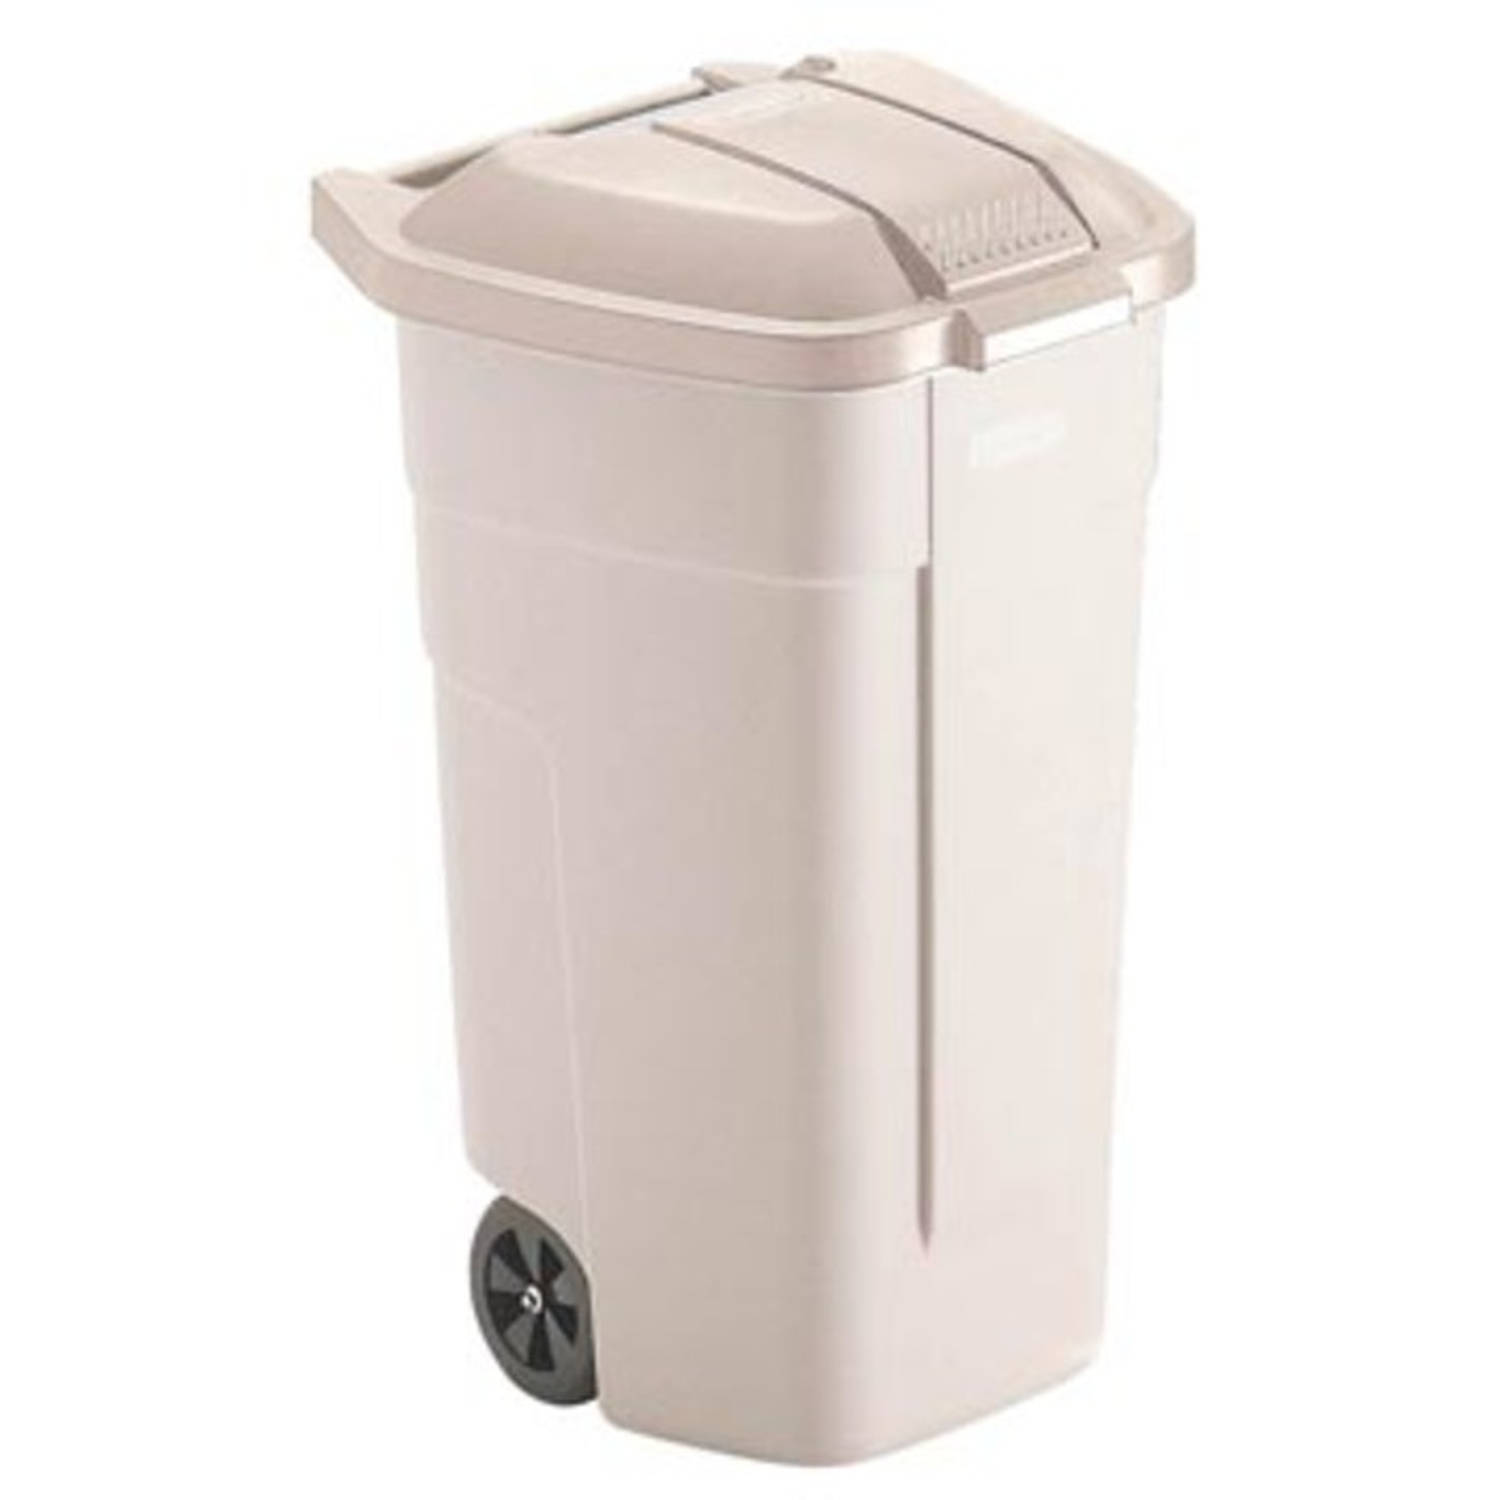 Rubbermaid mobiele afvalcontainer Basis, zonder deksel, 100 liter, wit